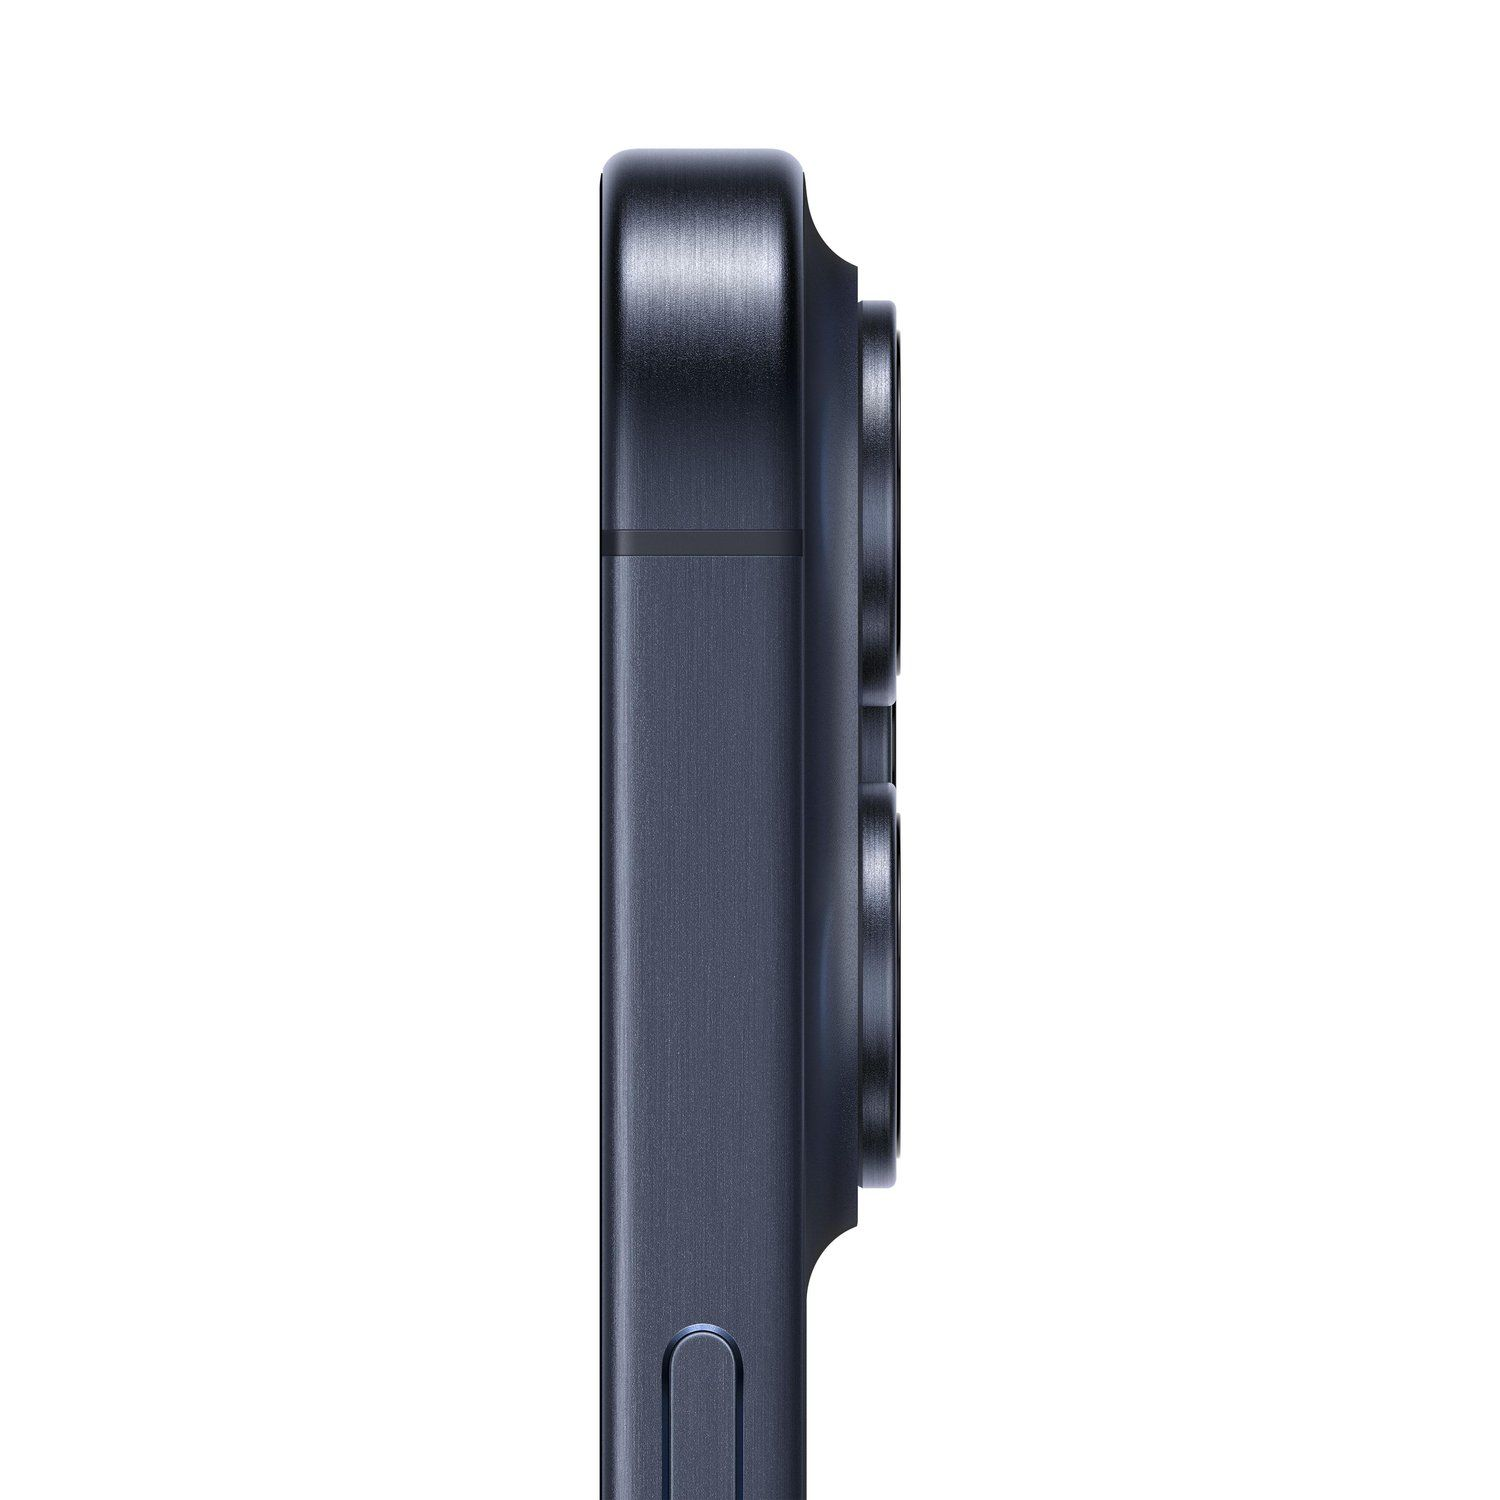 Max Pro SIM APPLE Dual Blau 1 15 TB Titan 5G REFURBISHED iPhone (*)